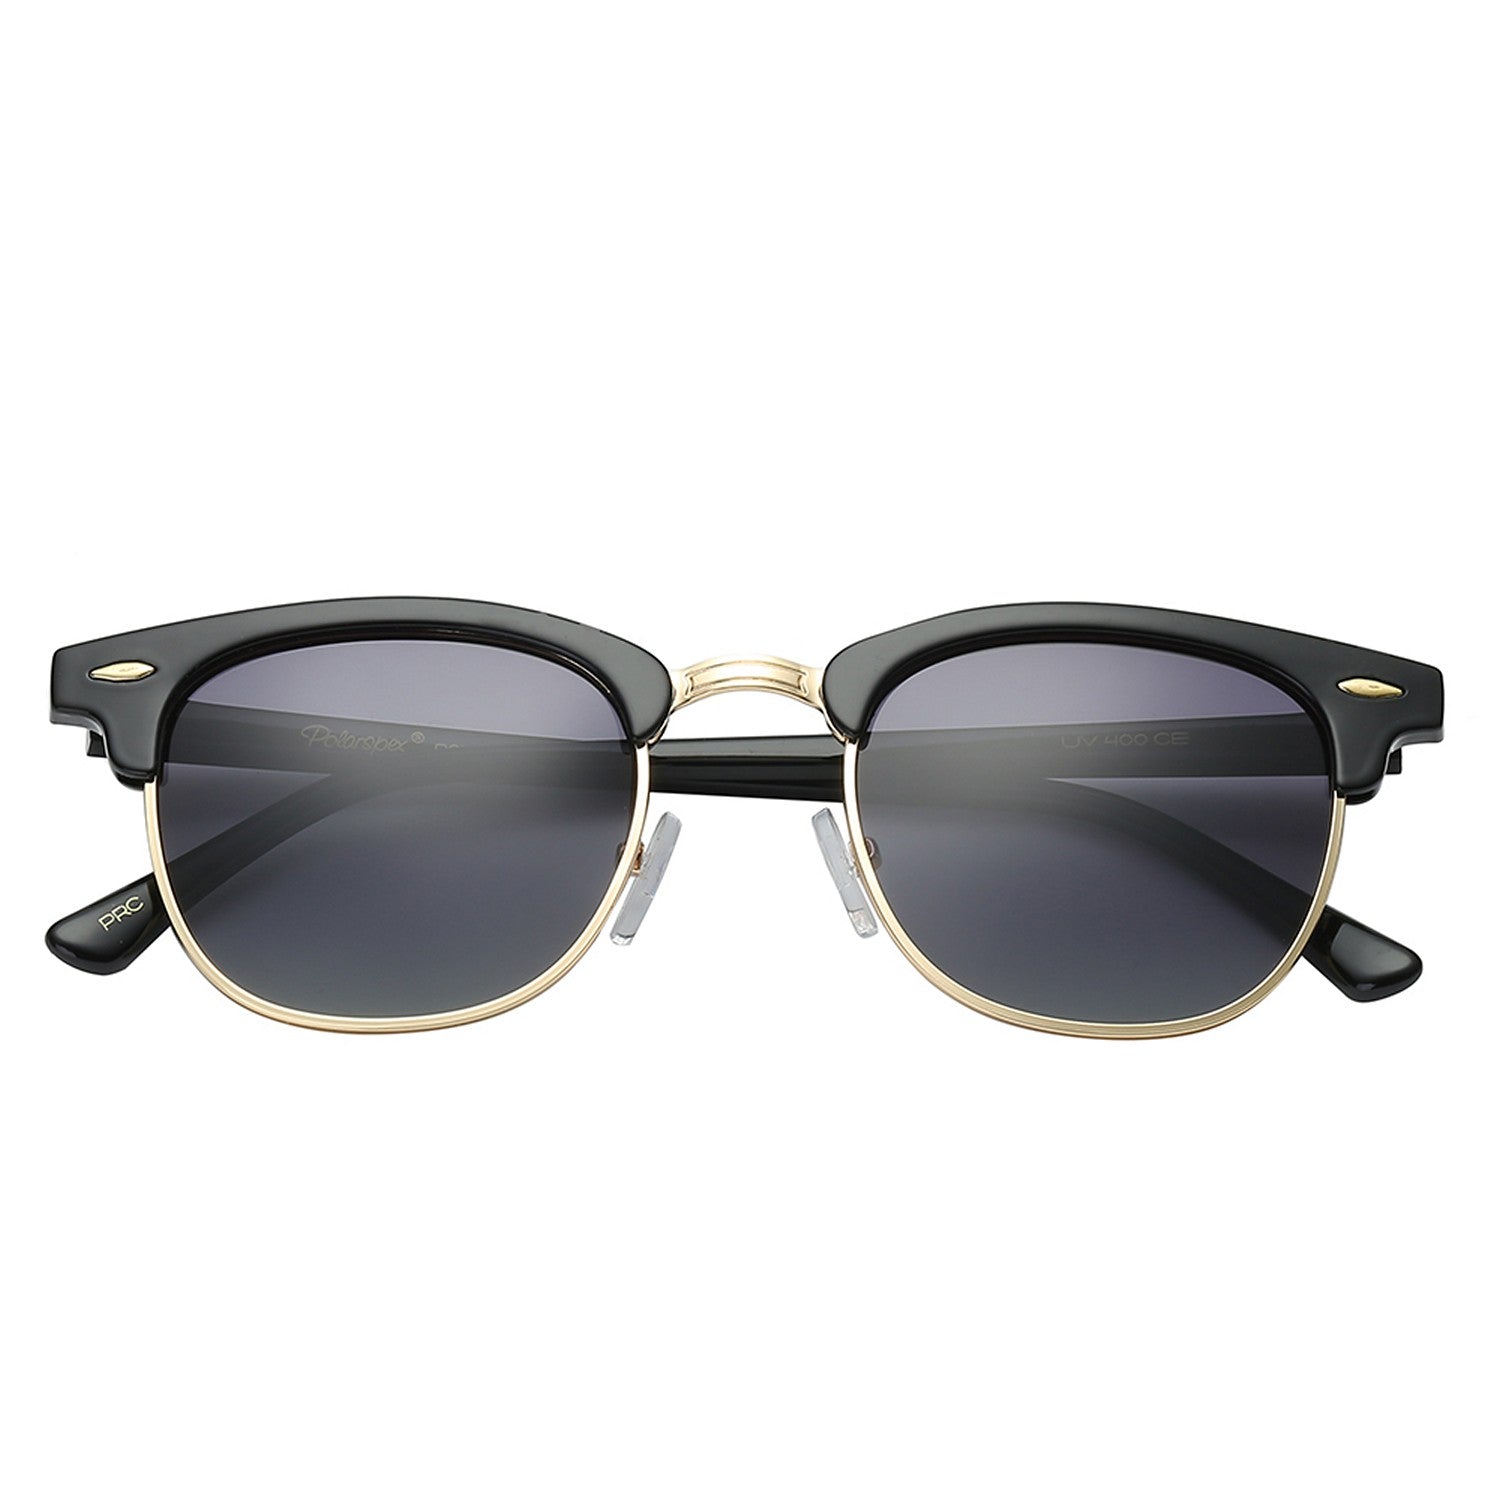 Polarspex Polarized Malcom Half Frame Semi-Rimless Style Unisex Sunglasses with Gloss Black Frames and Gradient Smoke Lenses